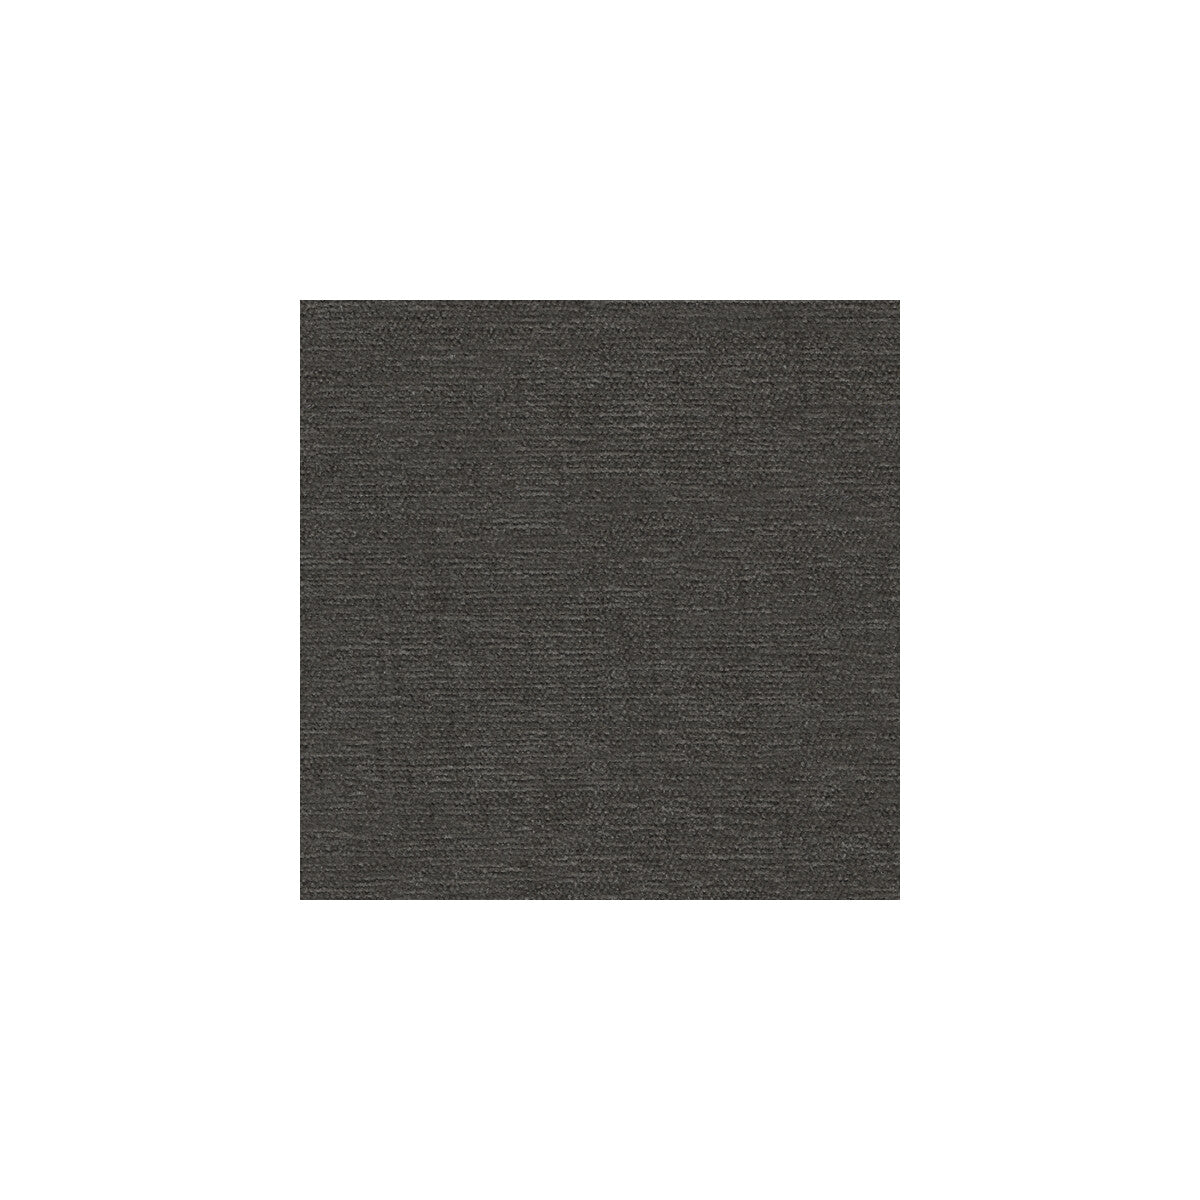 Kravet Smart fabric in 26837-811 color - pattern 26837.811.0 - by Kravet Smart